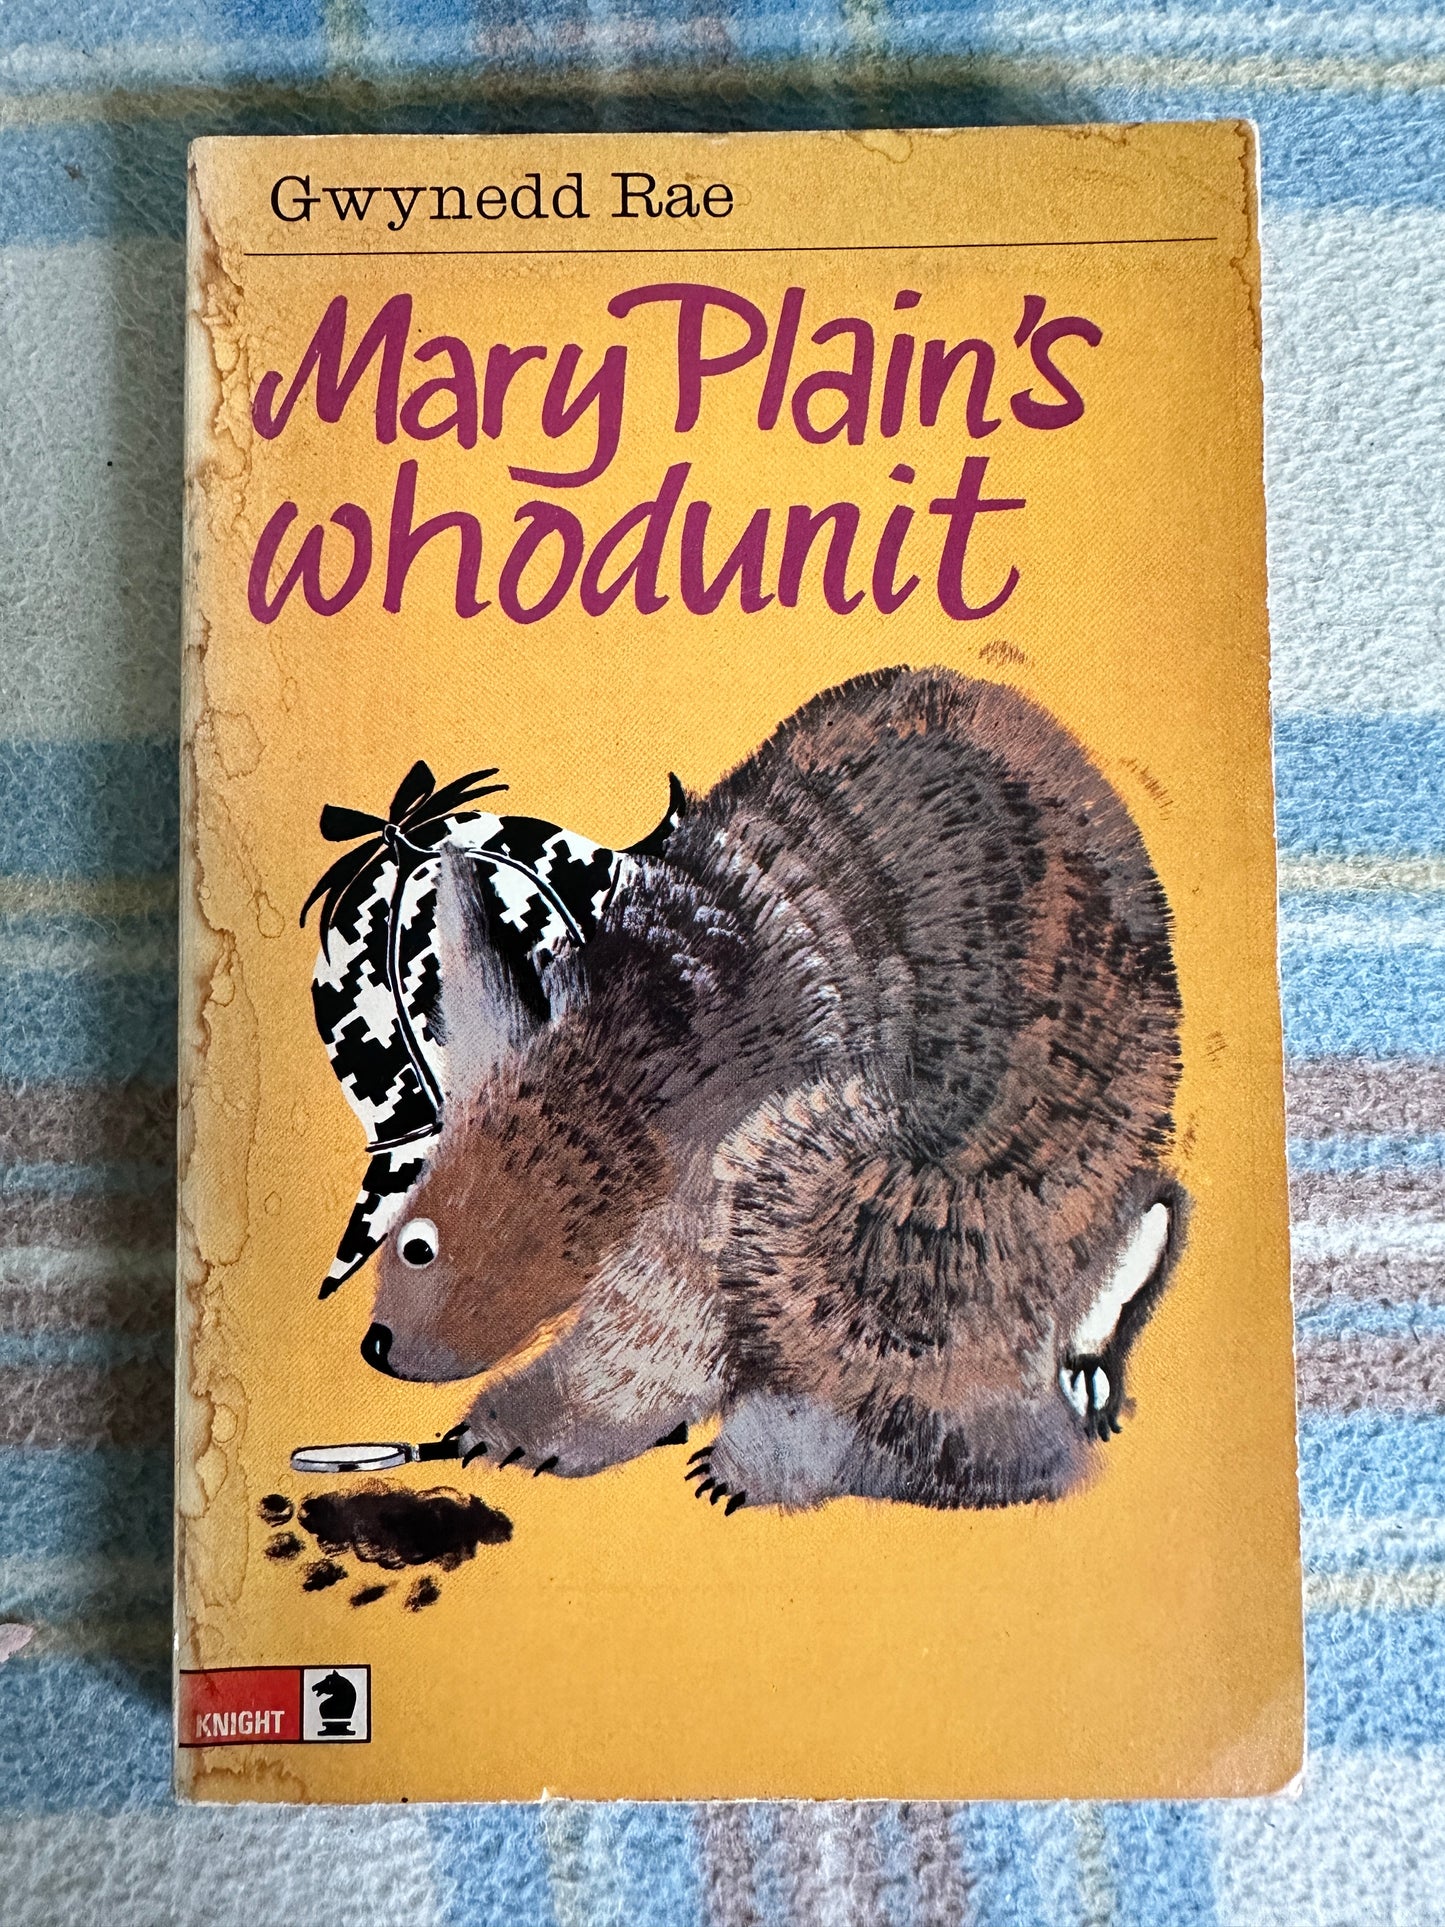 1973*1st* Mary Plain’s Whodunit? - Gwynedd Rae(Janina Ede illustration)Knight Books